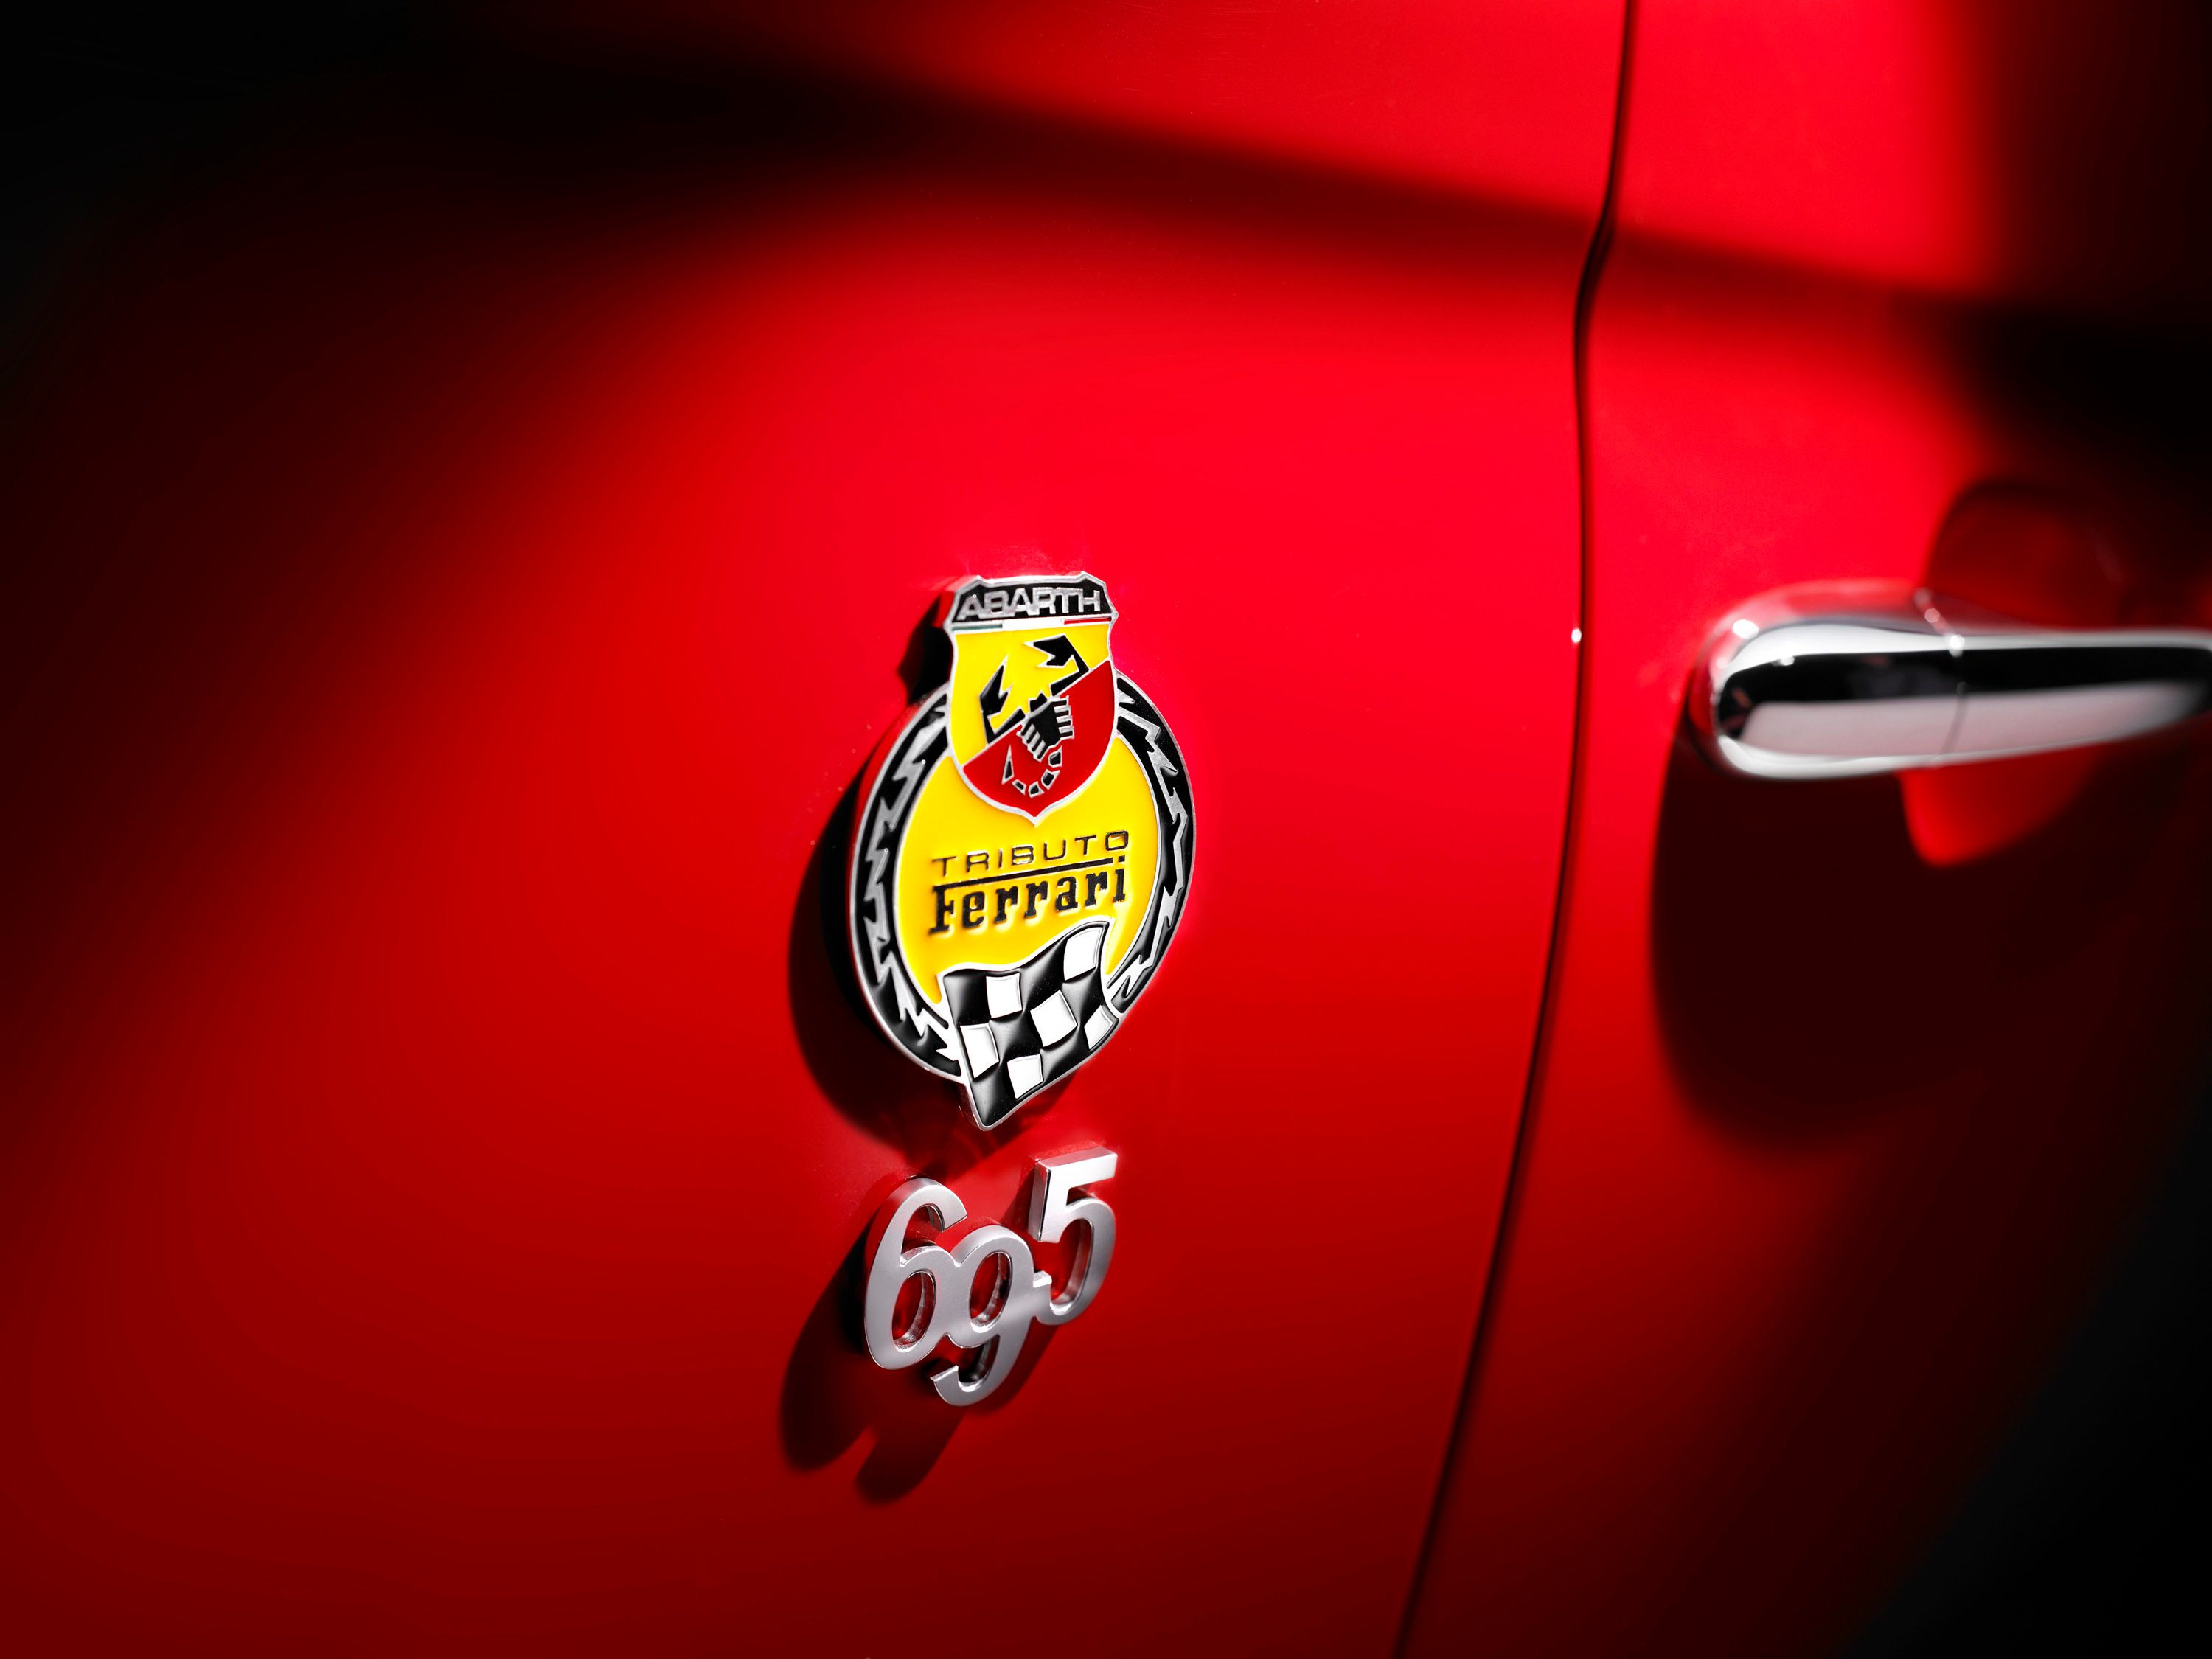 2010 Abarth 695 Tributo Ferrari UK Edition